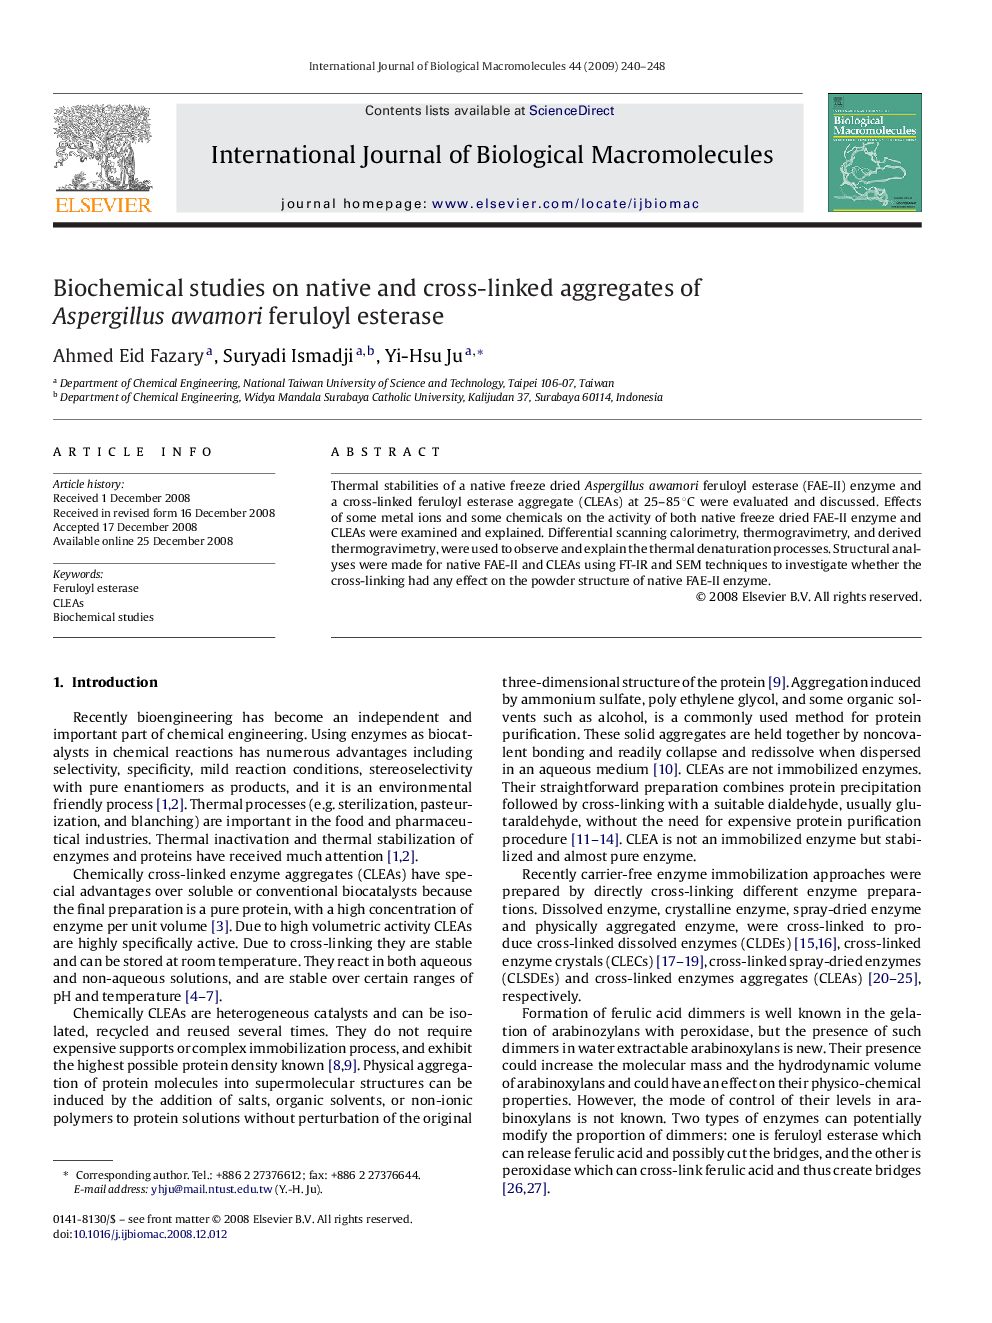 Biochemical studies on native and cross-linked aggregates of Aspergillus awamori feruloyl esterase